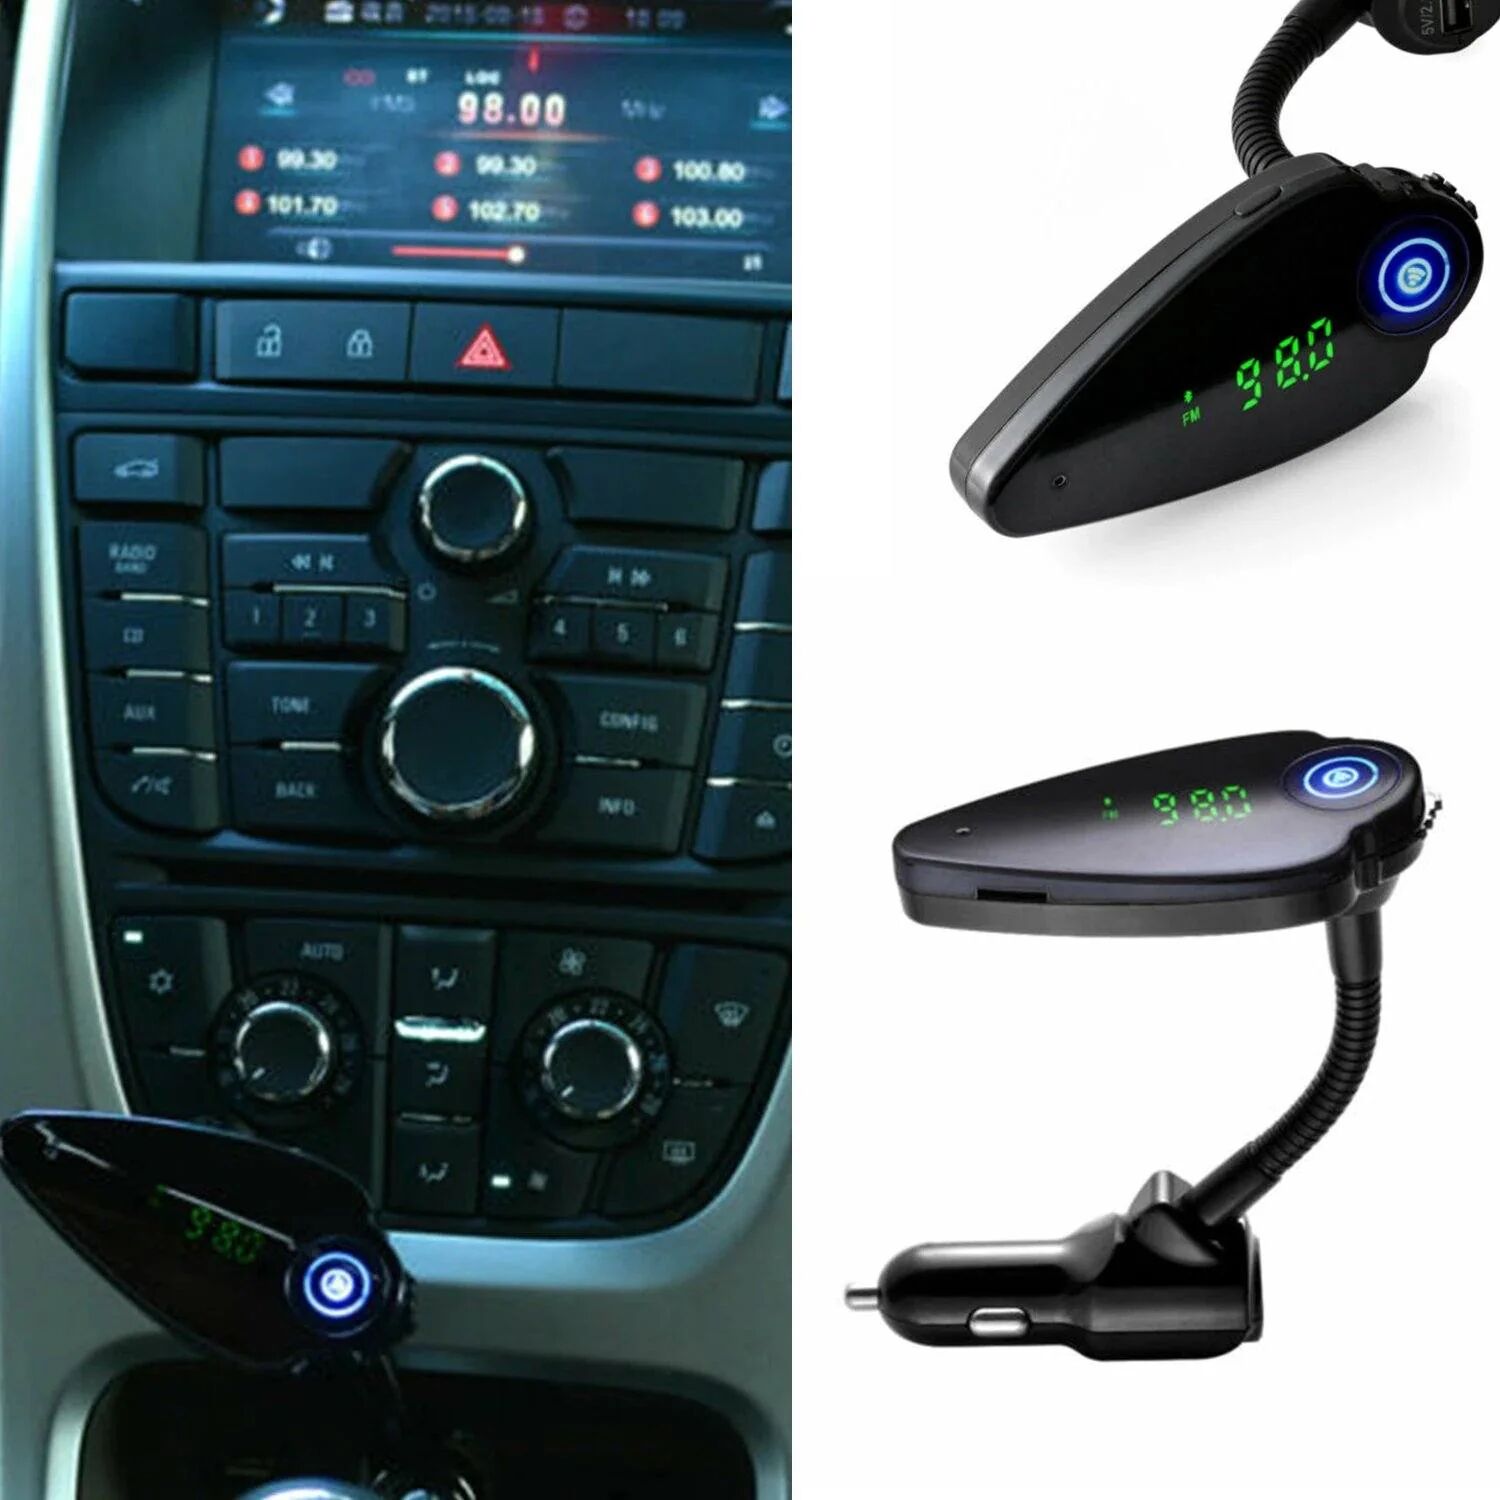 DailySale Wireless Bluetooth Car USB Charger FM Transmitter Auto Handsfree Adapter Audio